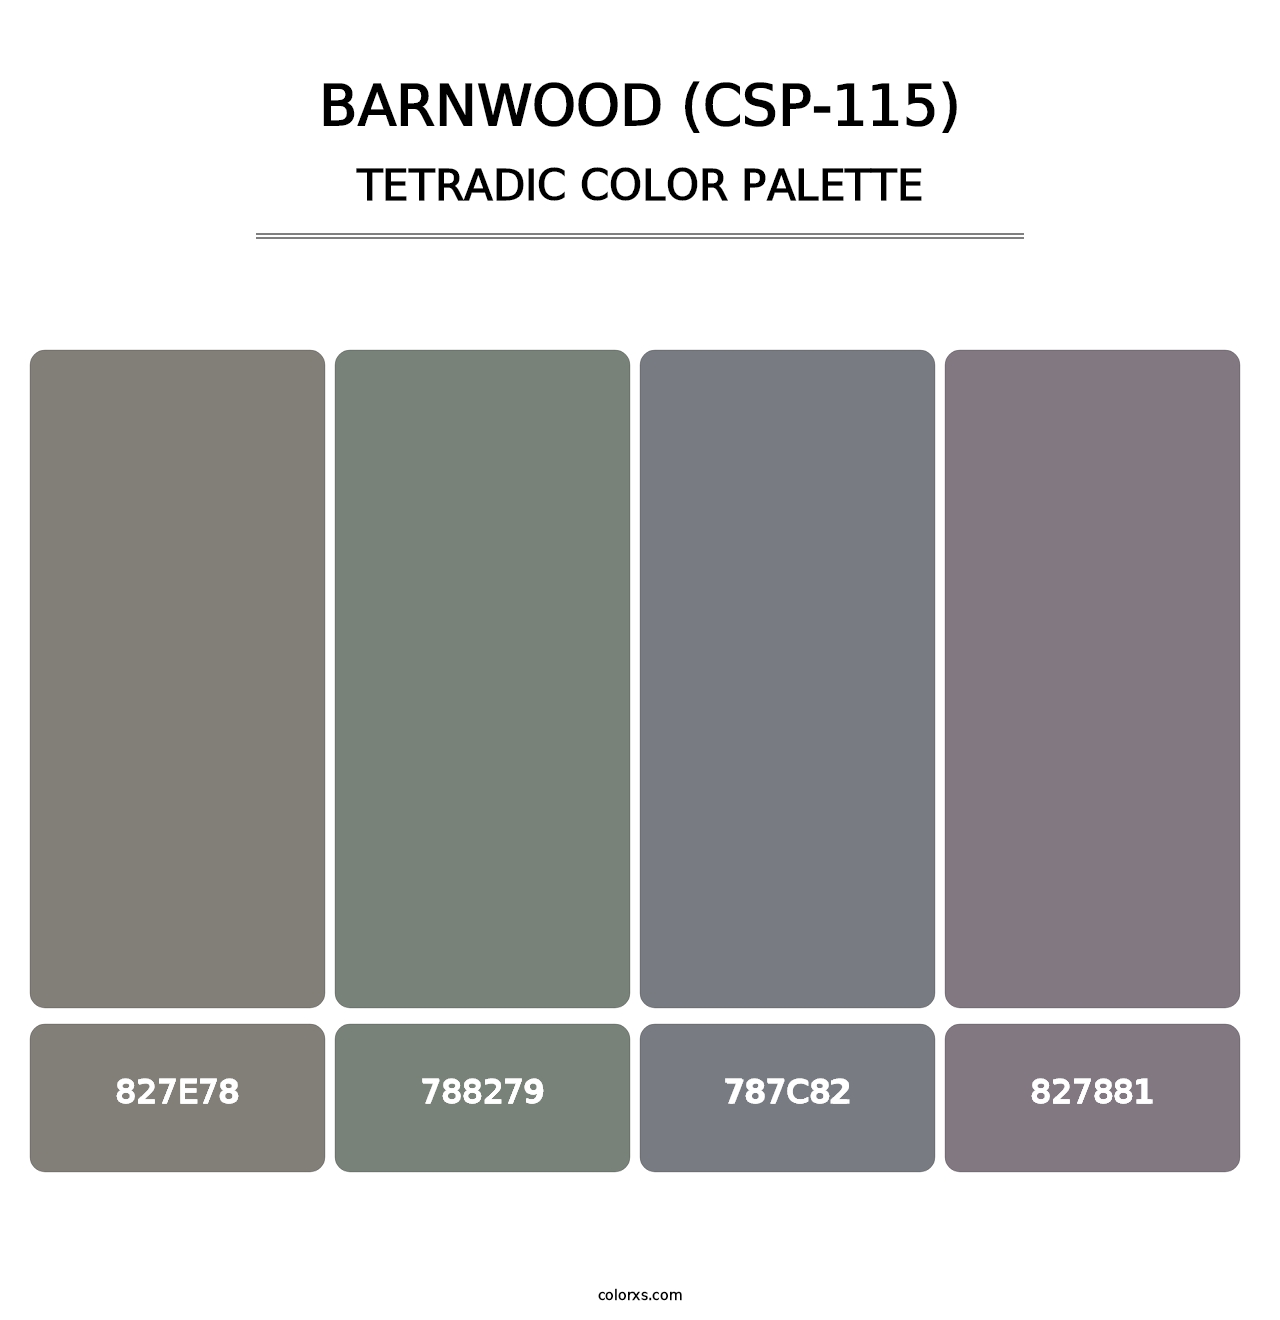 Barnwood (CSP-115) - Tetradic Color Palette